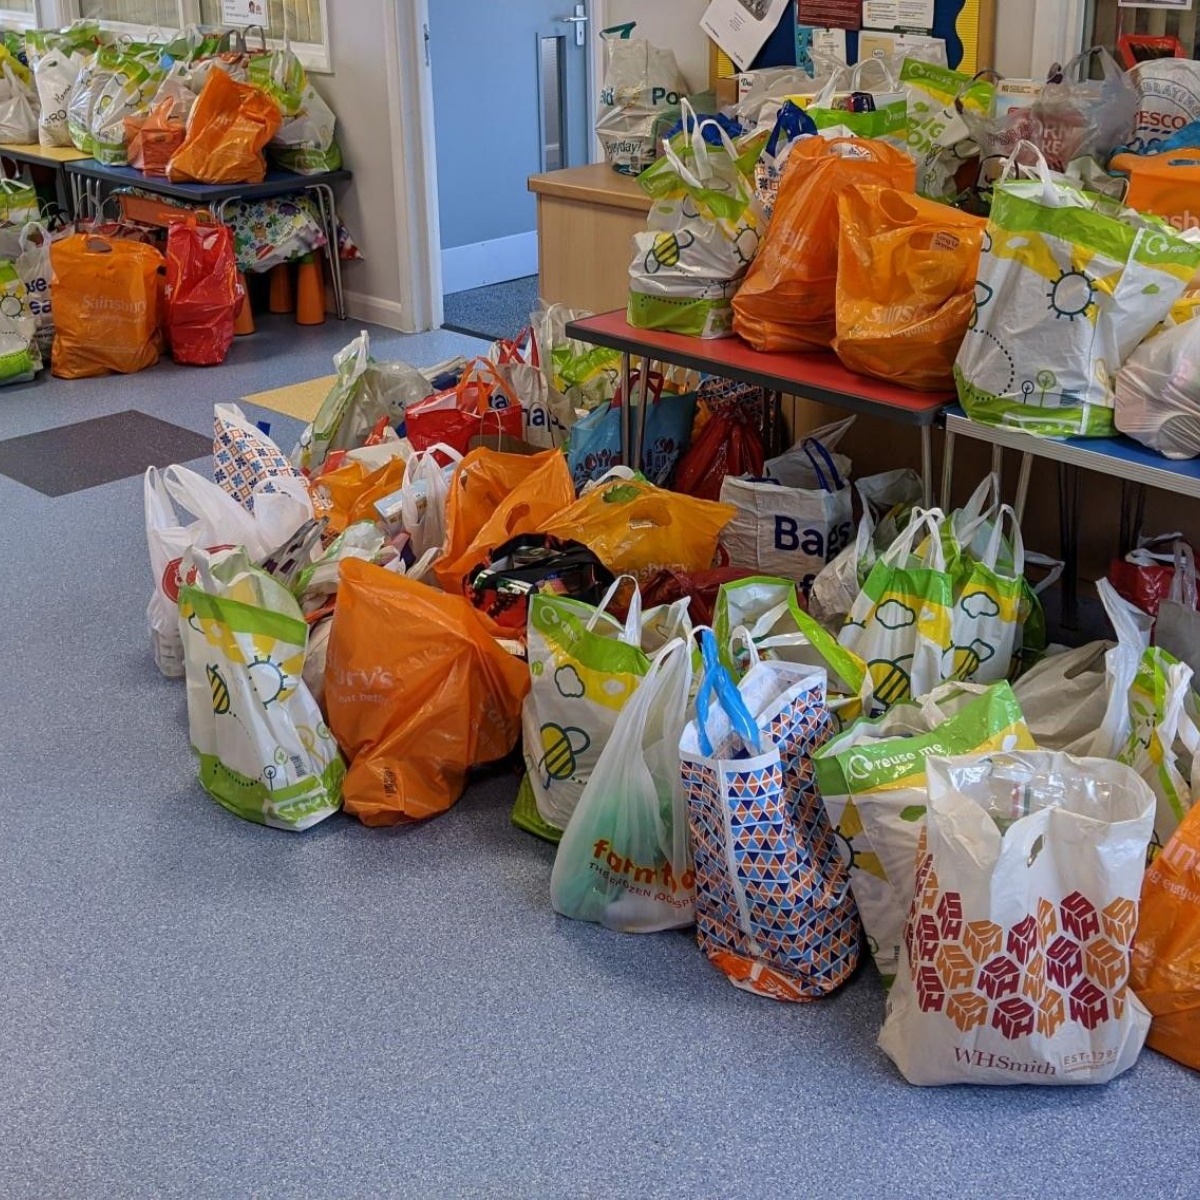 Putteridge Primary School - 1835 items donated for Luton Foodbank